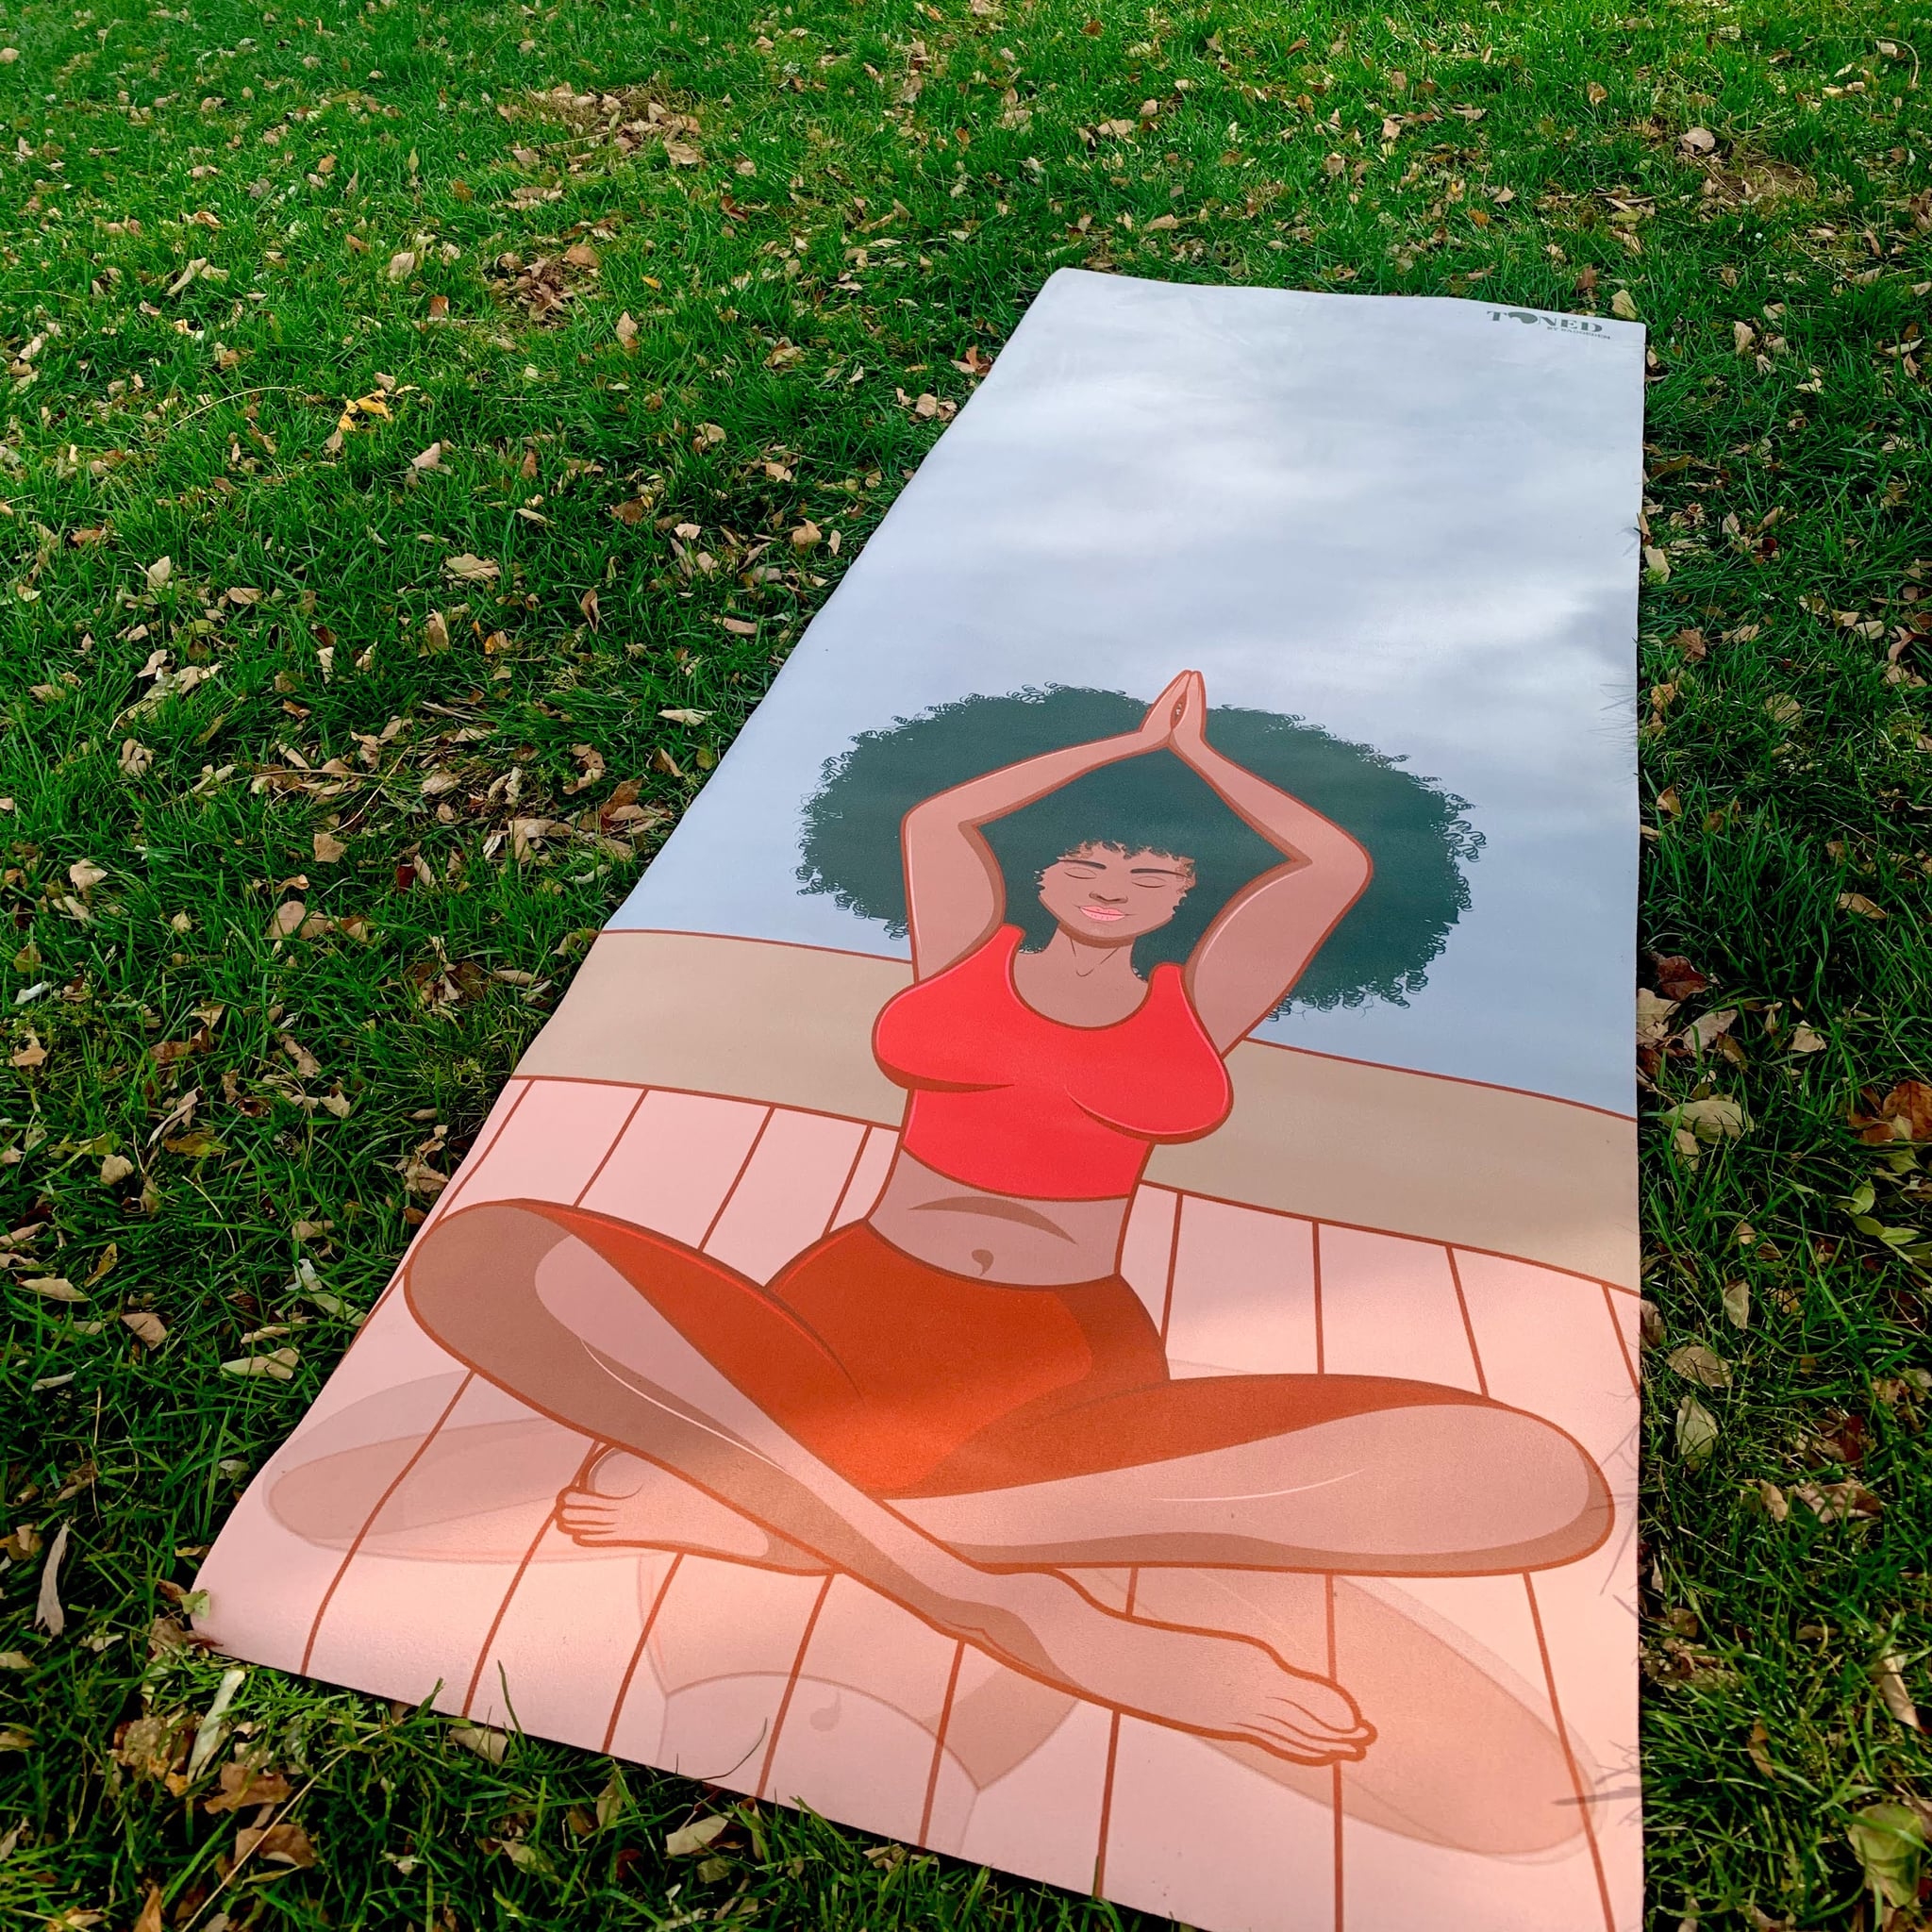 yoga mat for women